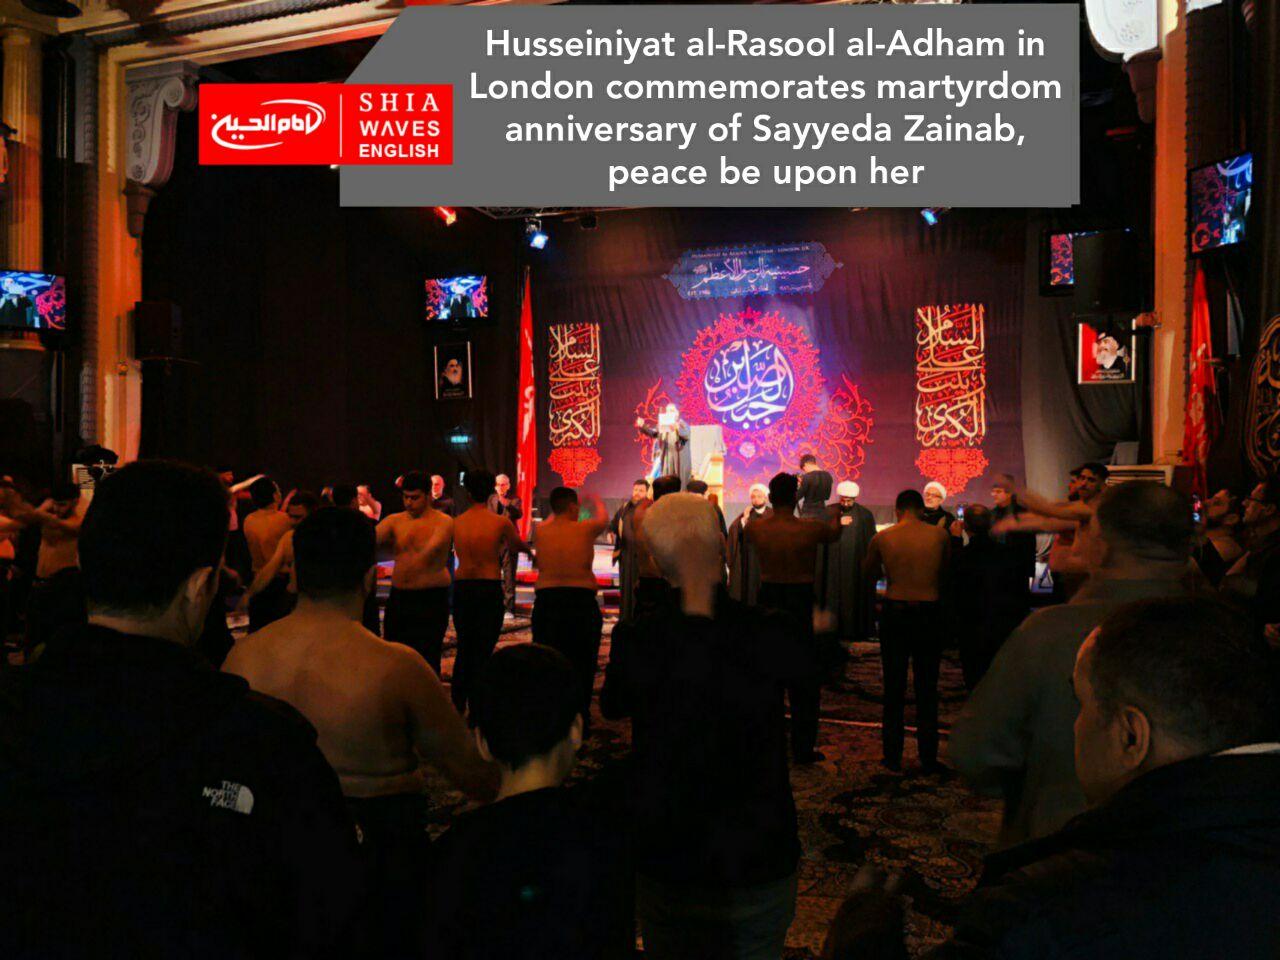 Photo of Husseiniyat al-Rasool al-Adham in London commemorates martyrdom anniversary of Sayyeda Zainab, peace be upon her